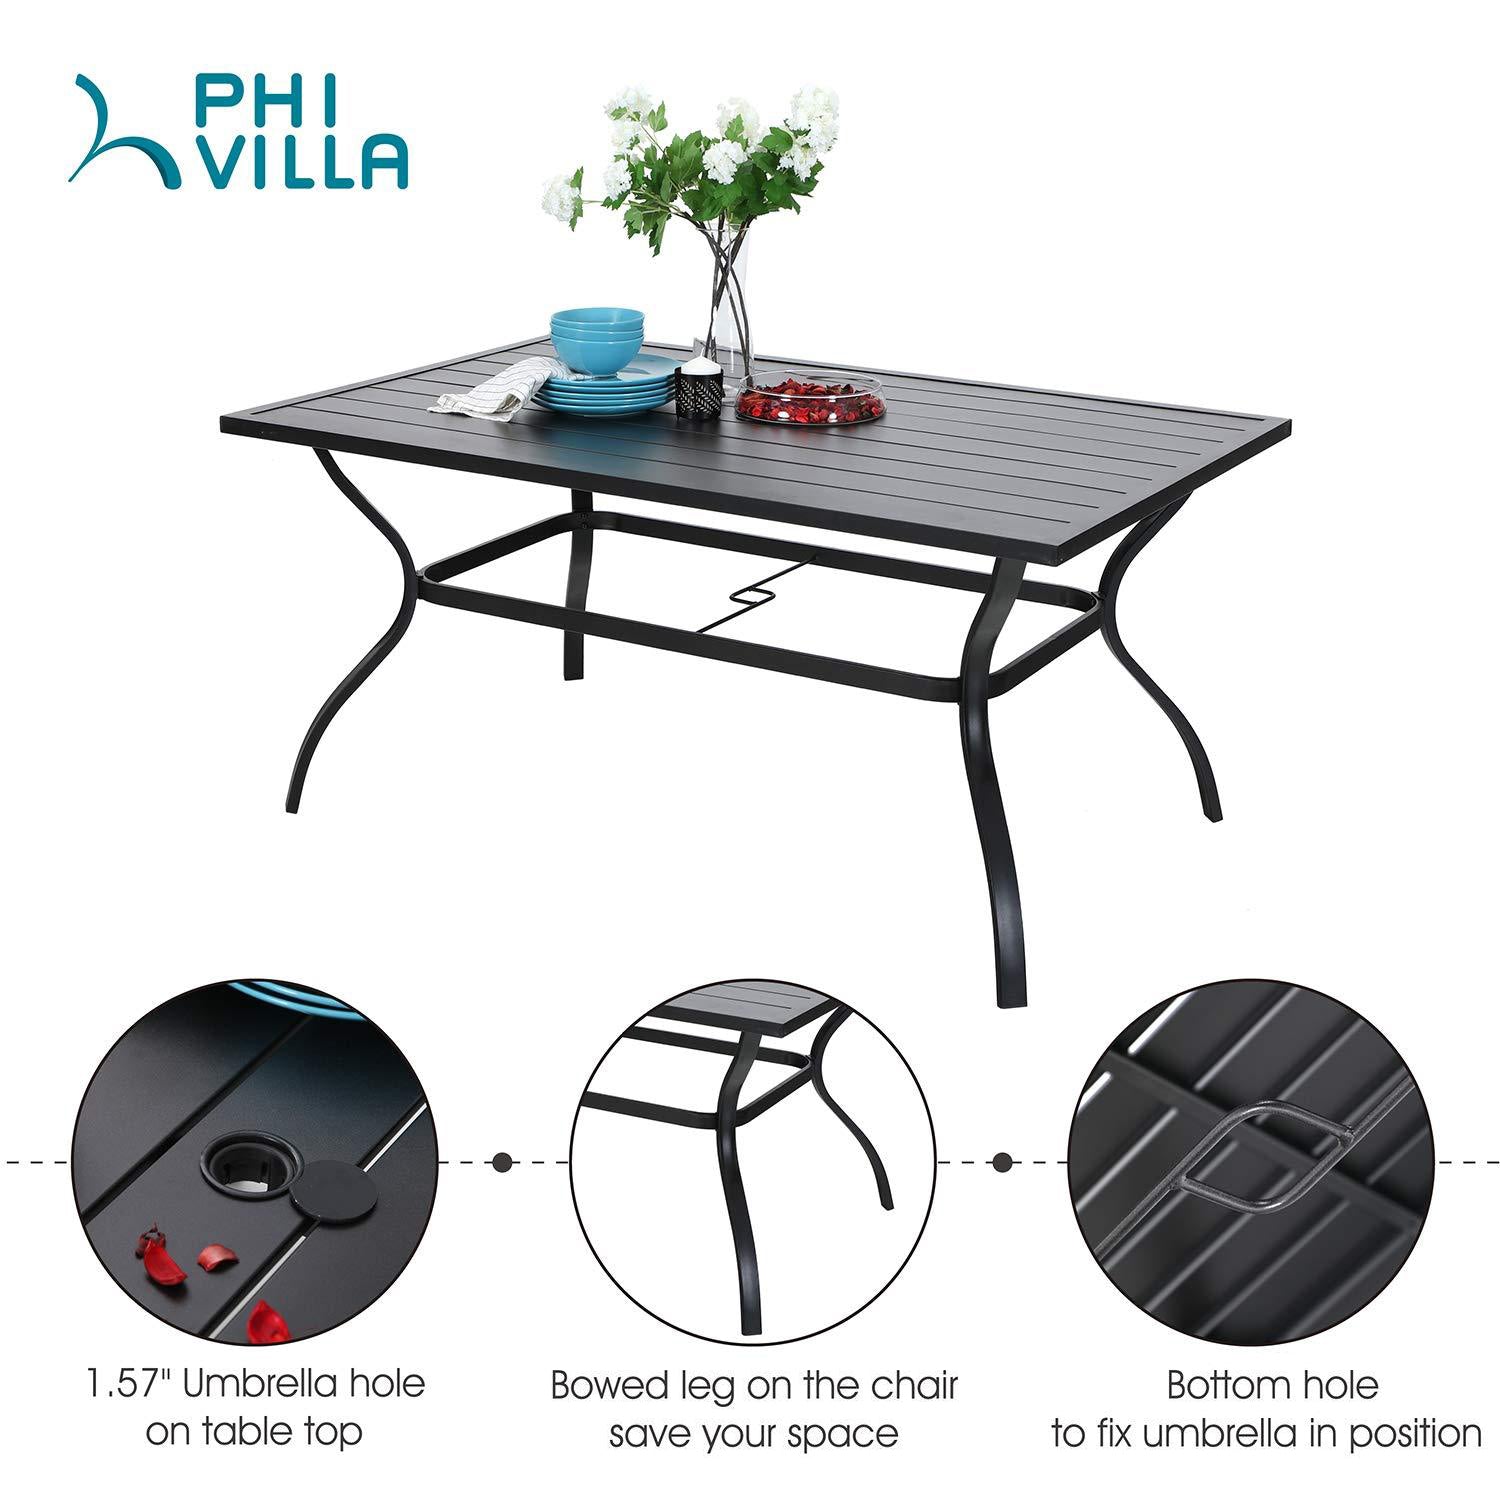 MFSTUDIO 7-Piece Steel Rectangle Table & Simple Aluminum Textilene Fixed Chairs Patio Dining Set